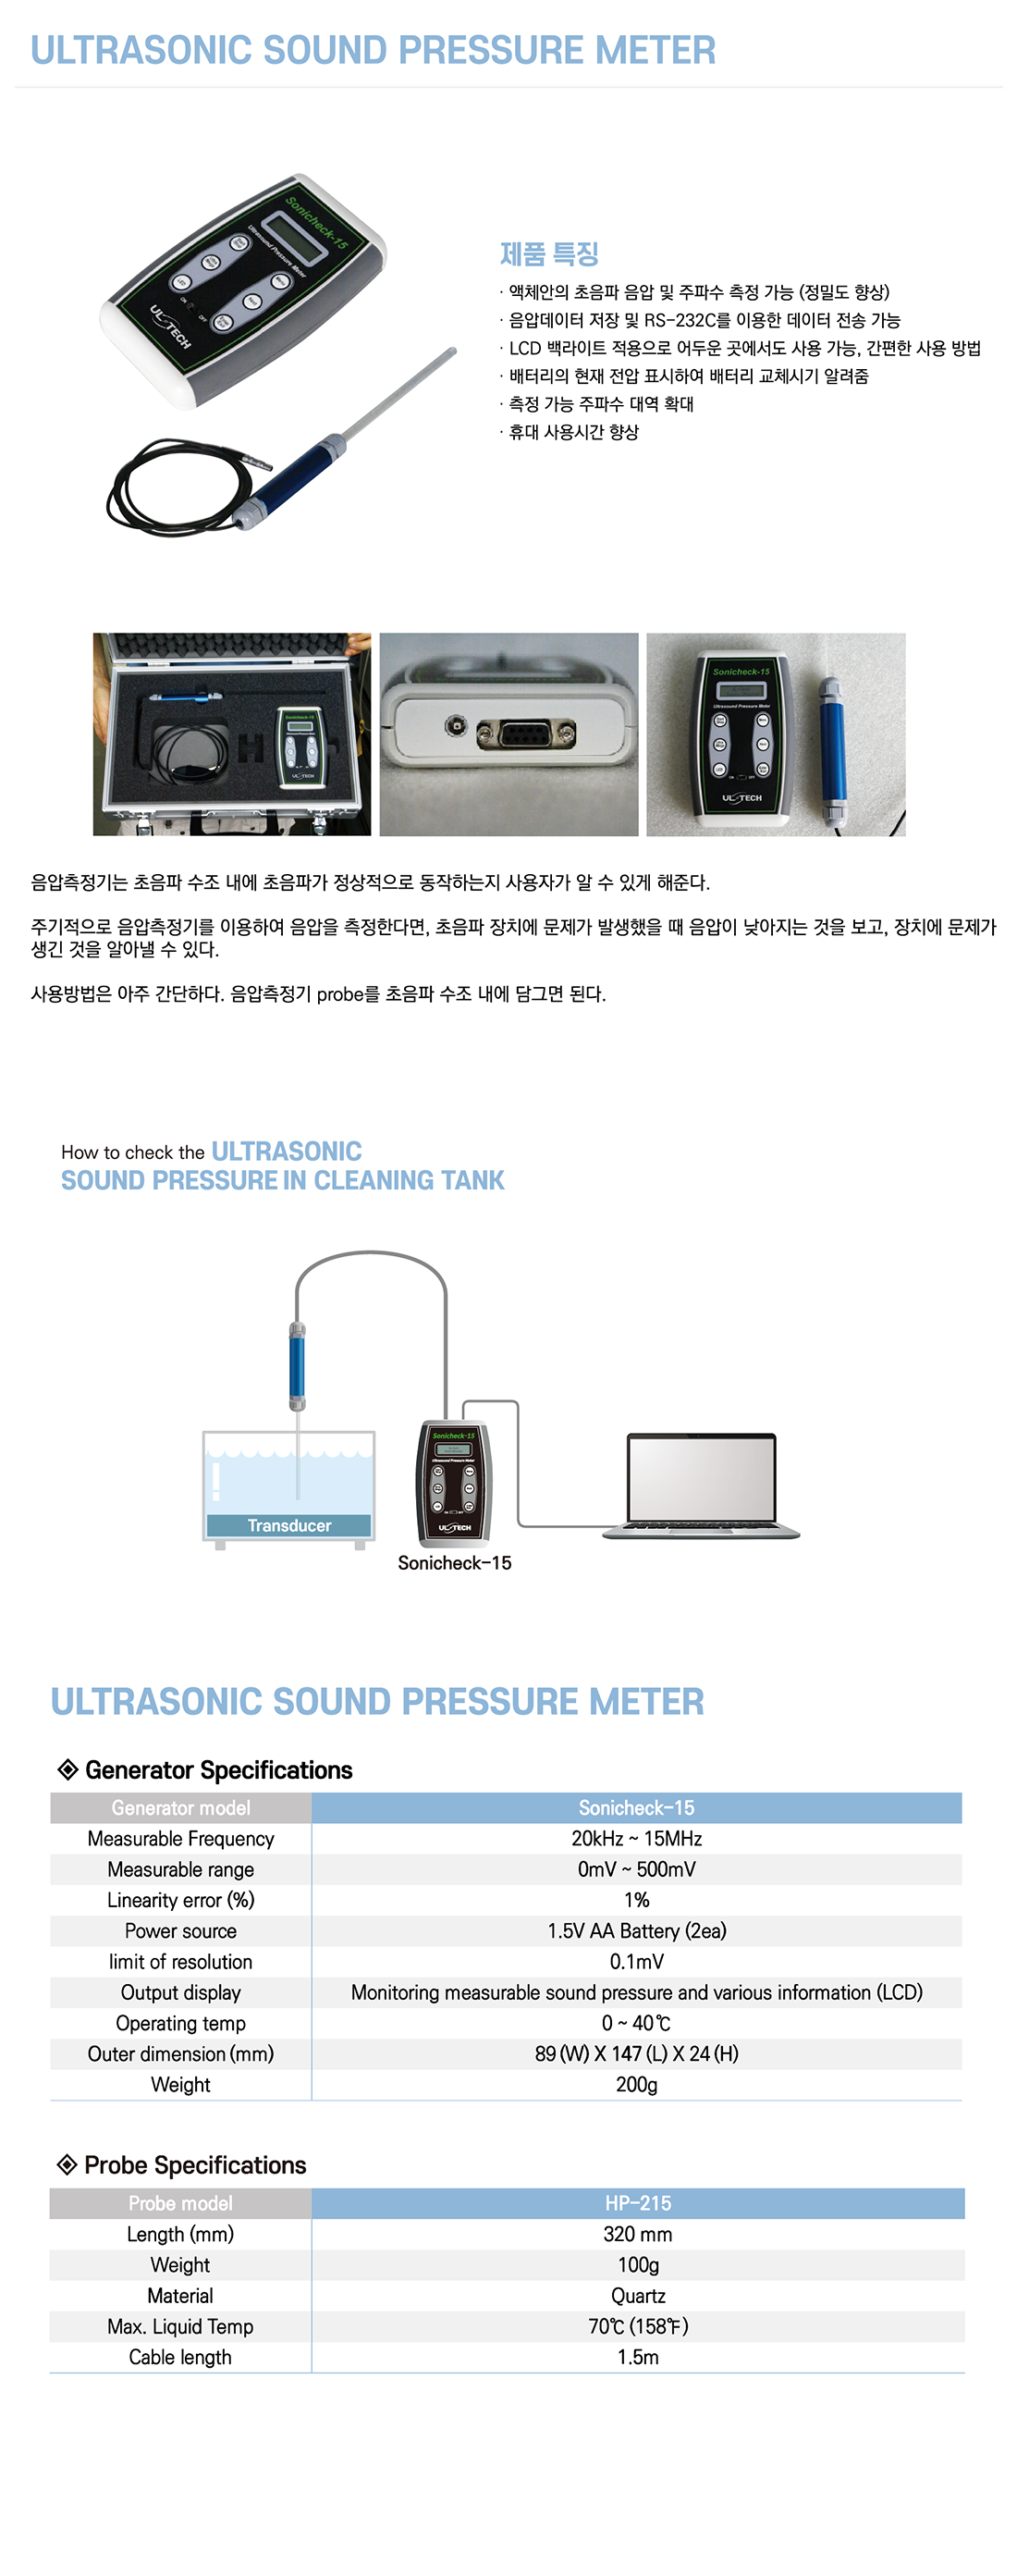 Máy đo áp suất Soundpressure meter, Sonicheck-15, UL-Tech Vietnam